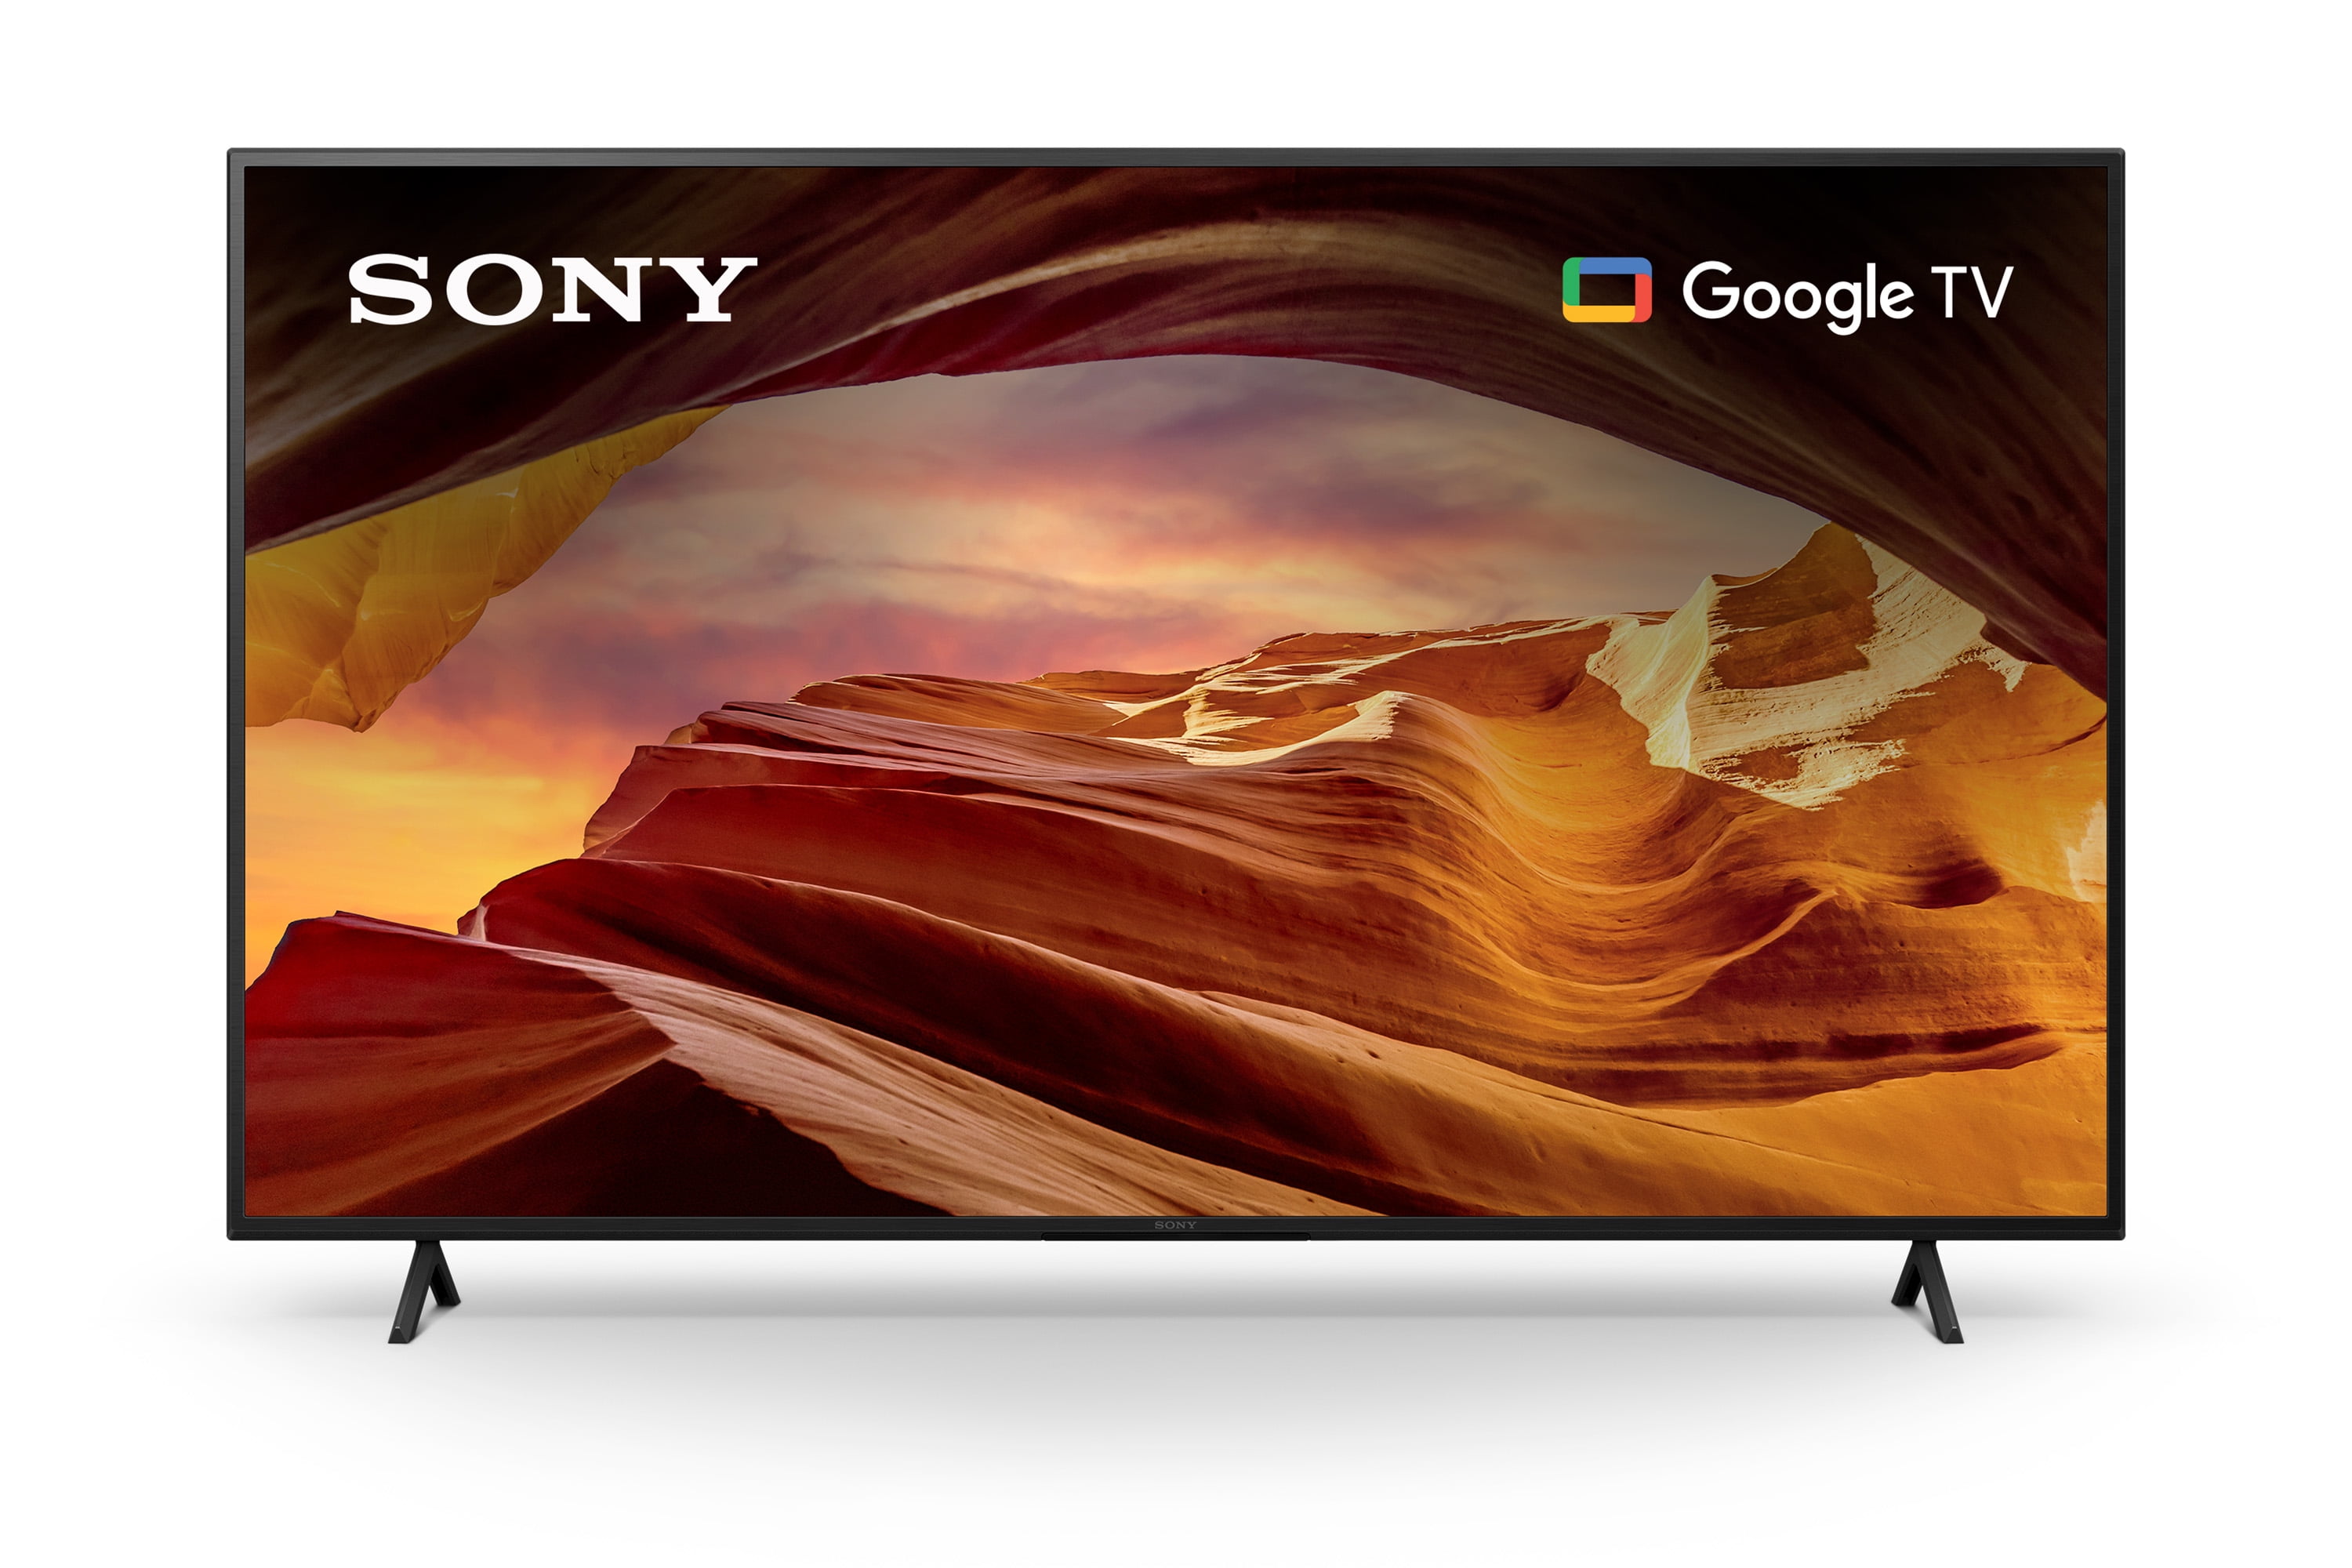 SONY TV 55'' 4K HDR - , SONY, BANG & OLUFSEN, Playstation,  Mauritius